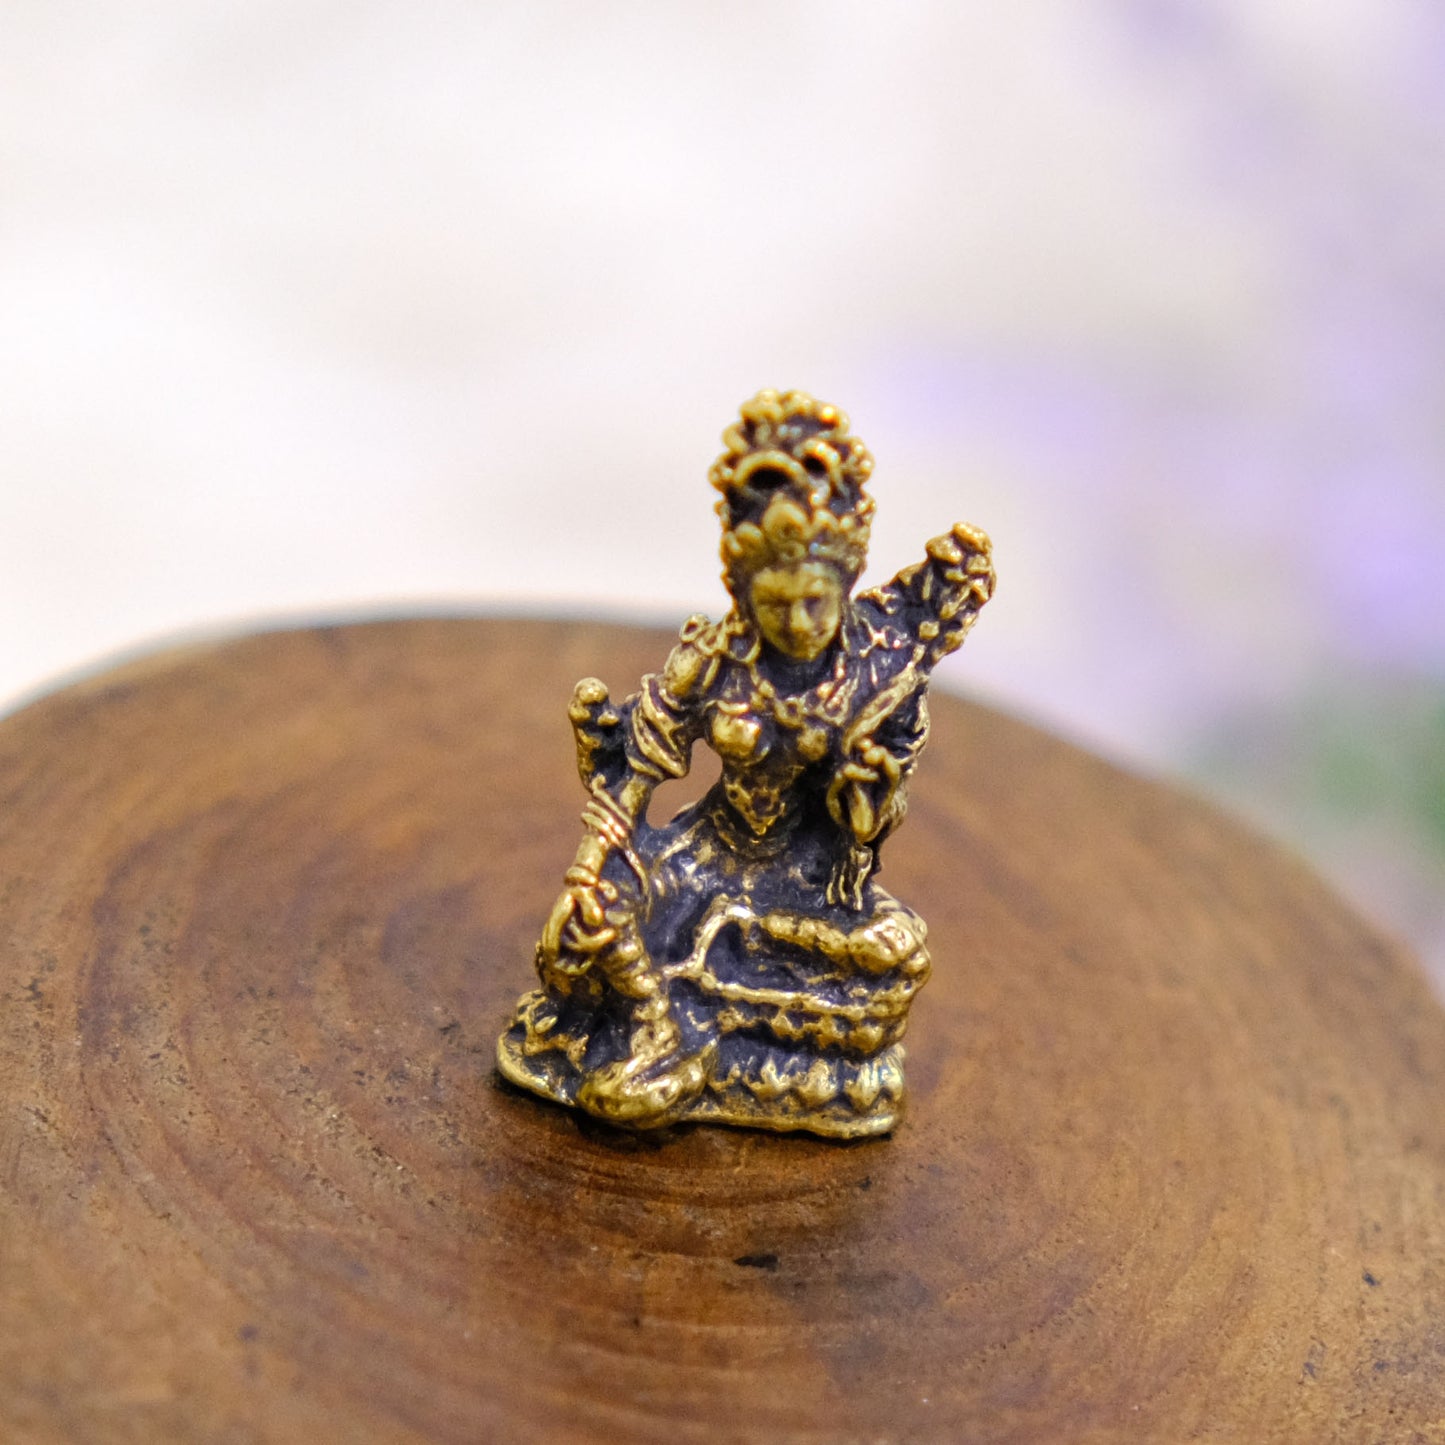 Brass Tara Statue, The Goddess of Compassion